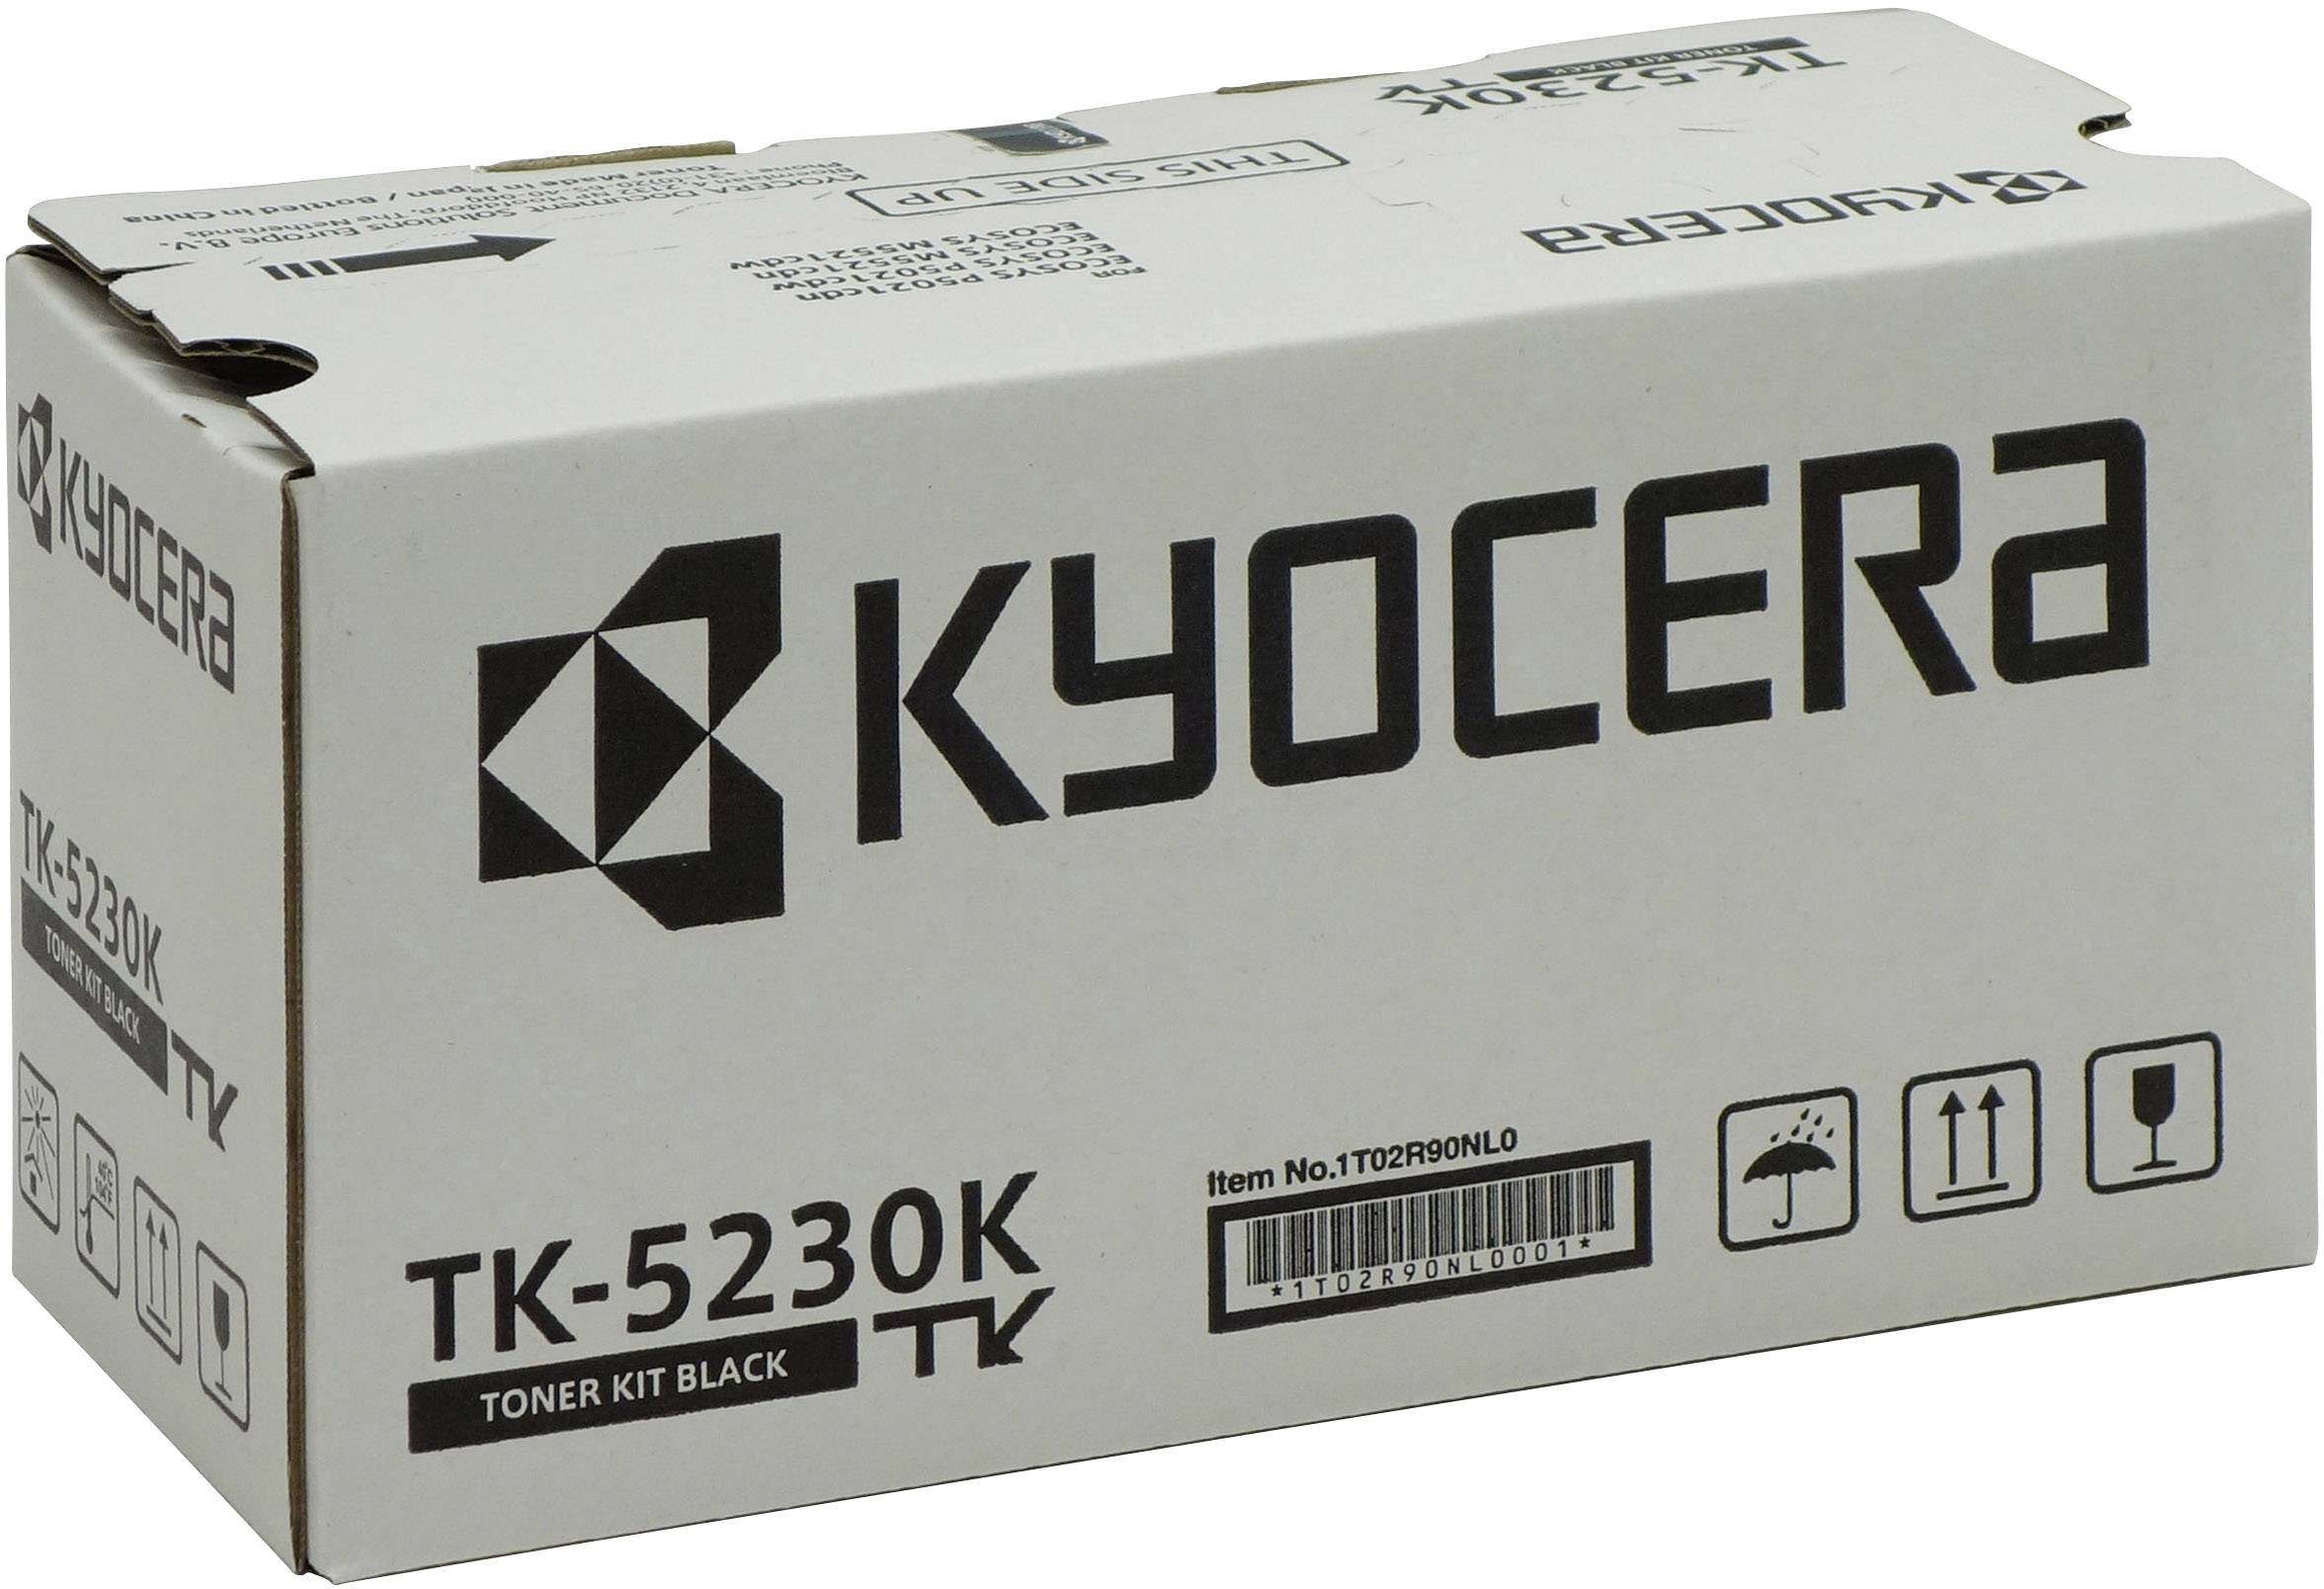 Kyocera TK-5230 Toner Cartridge for Kyocera ECOSYS P5021 and M5521